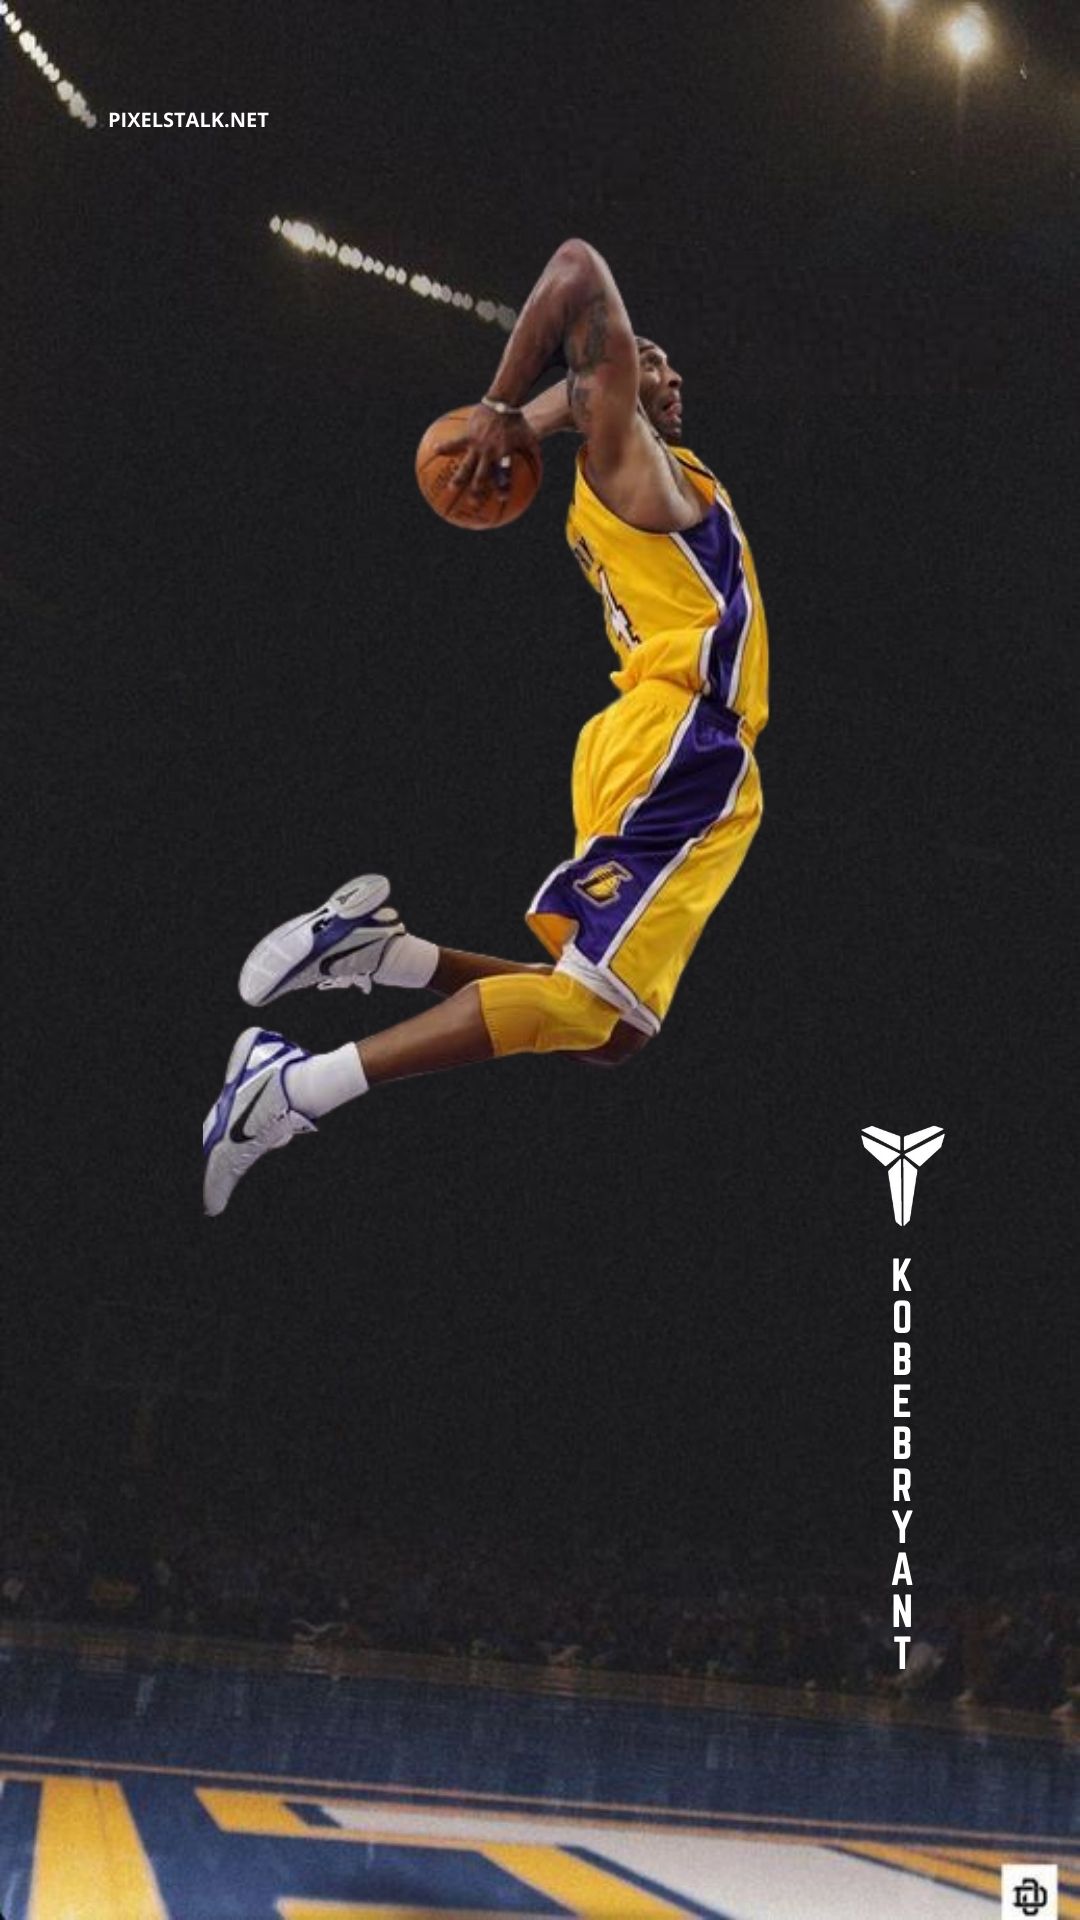 Kobe Bryant jumping up to dunk the basketball. - Kobe Bryant